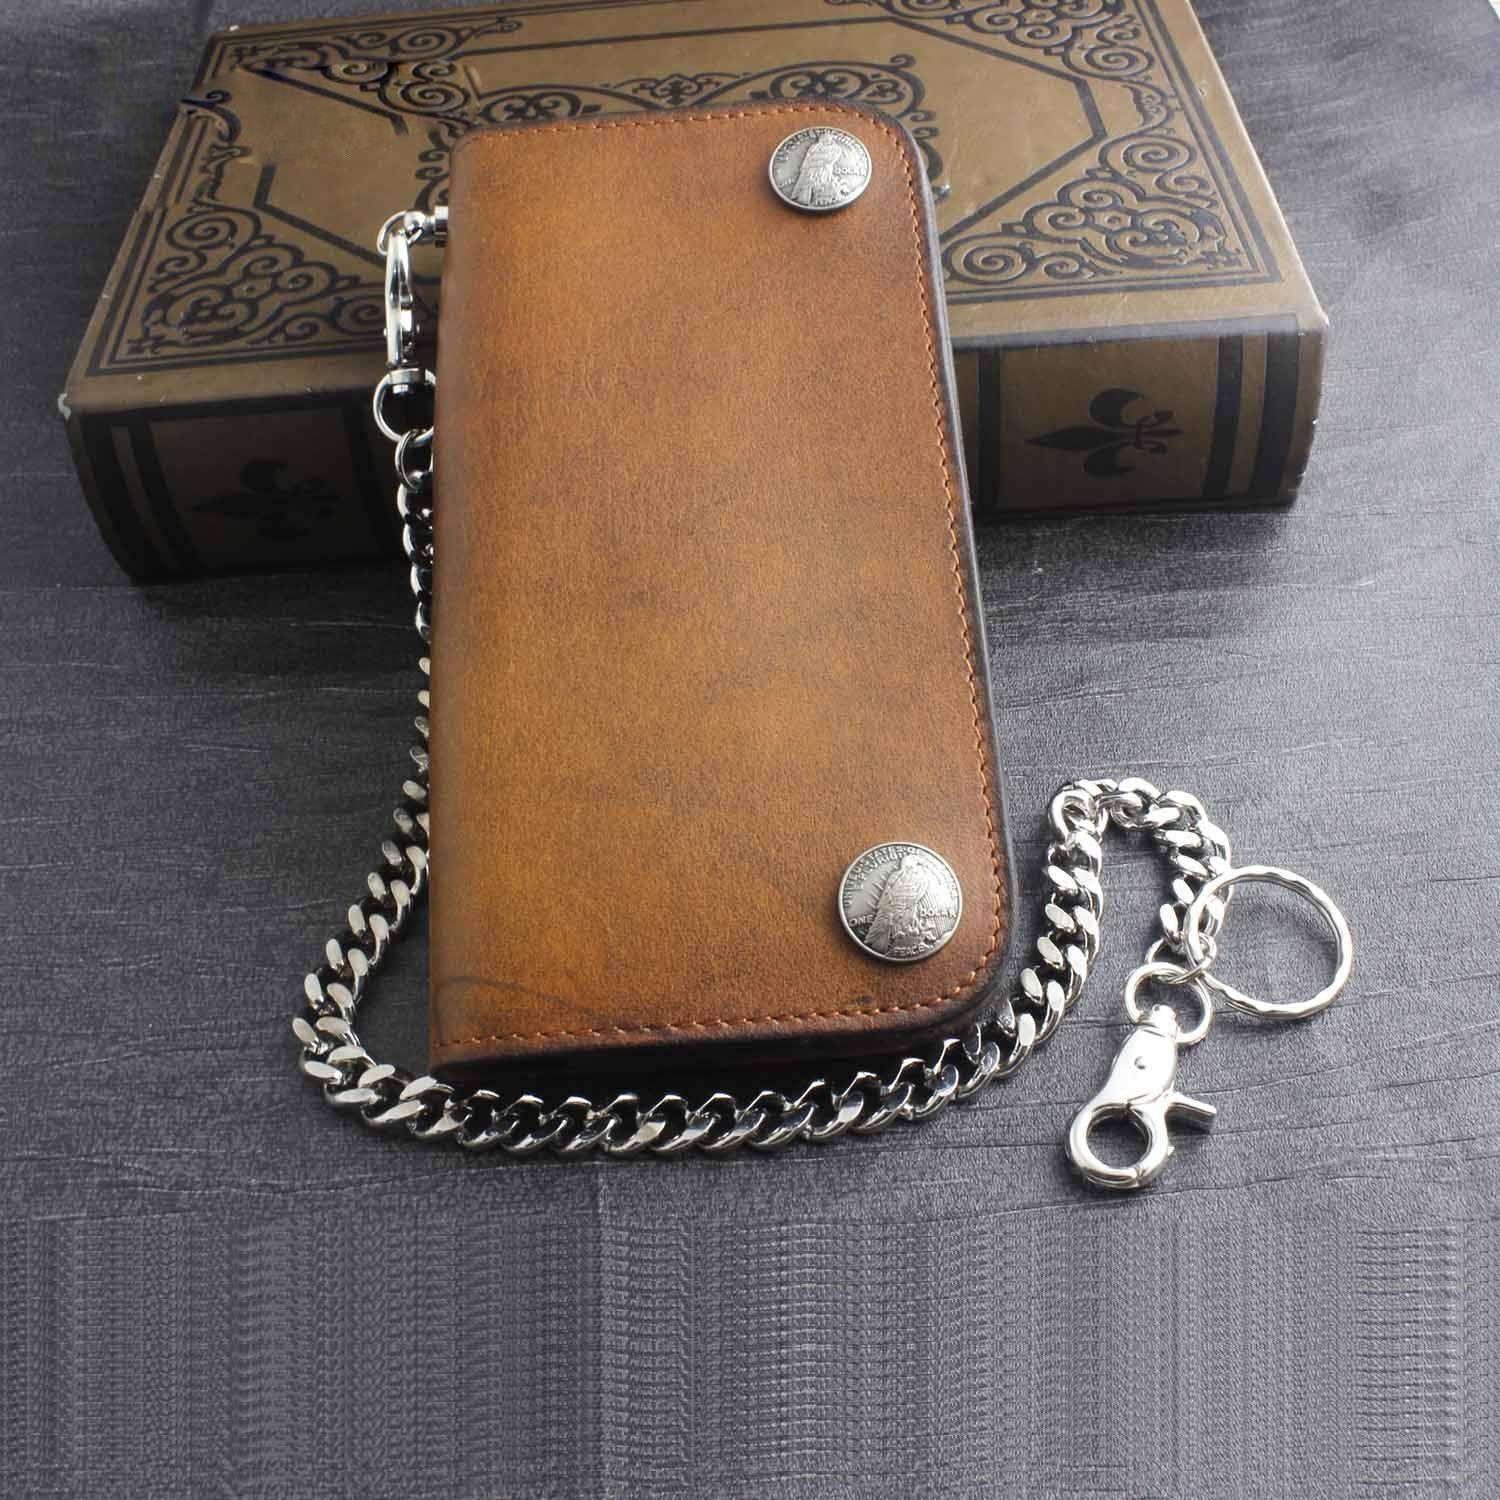 Contacts Men's Genuine Leather Cowhide Designer Key Holder Wallet